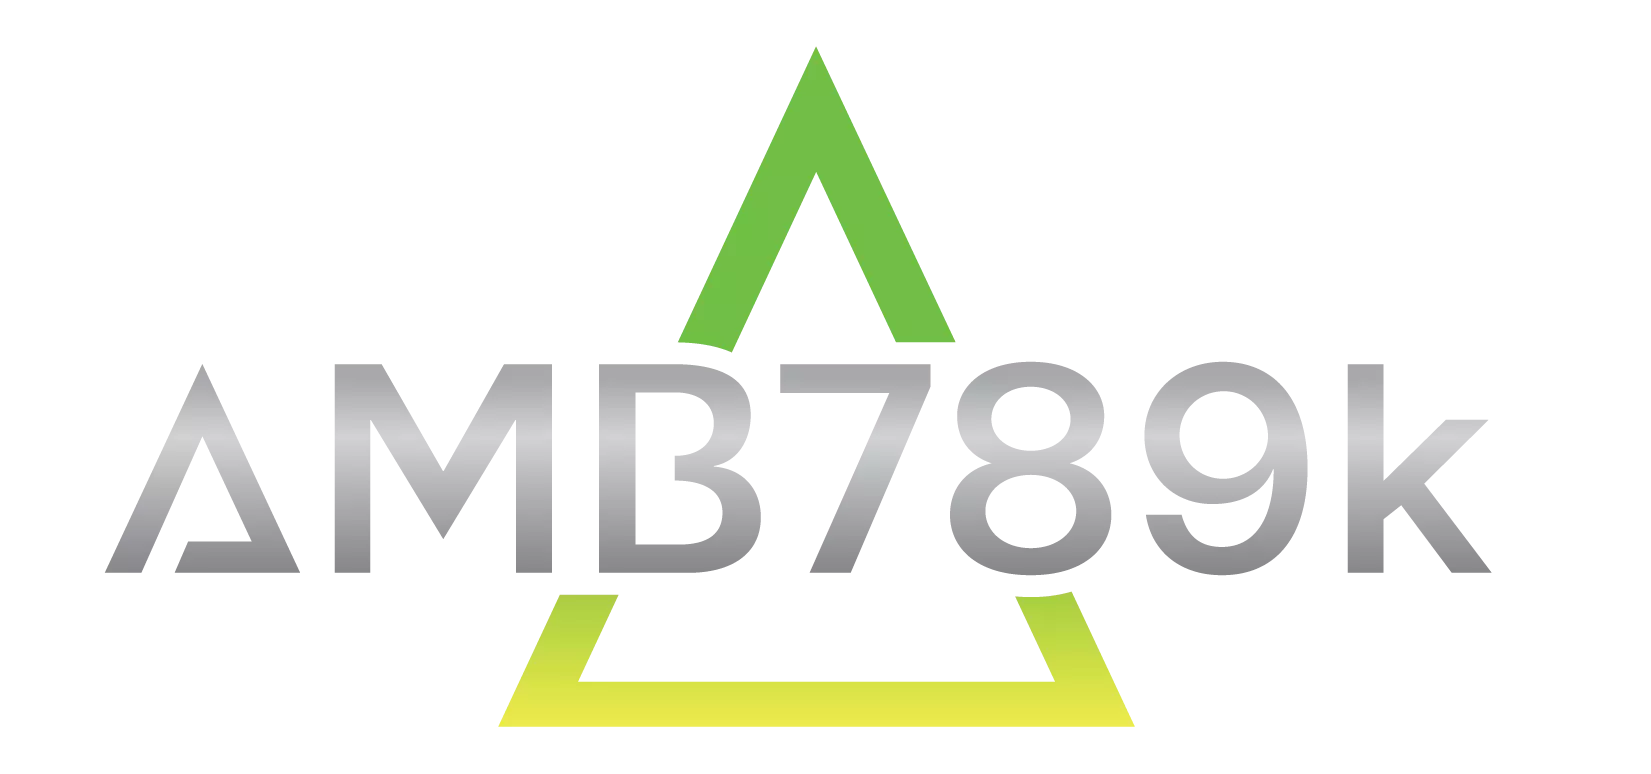 amb789k logo